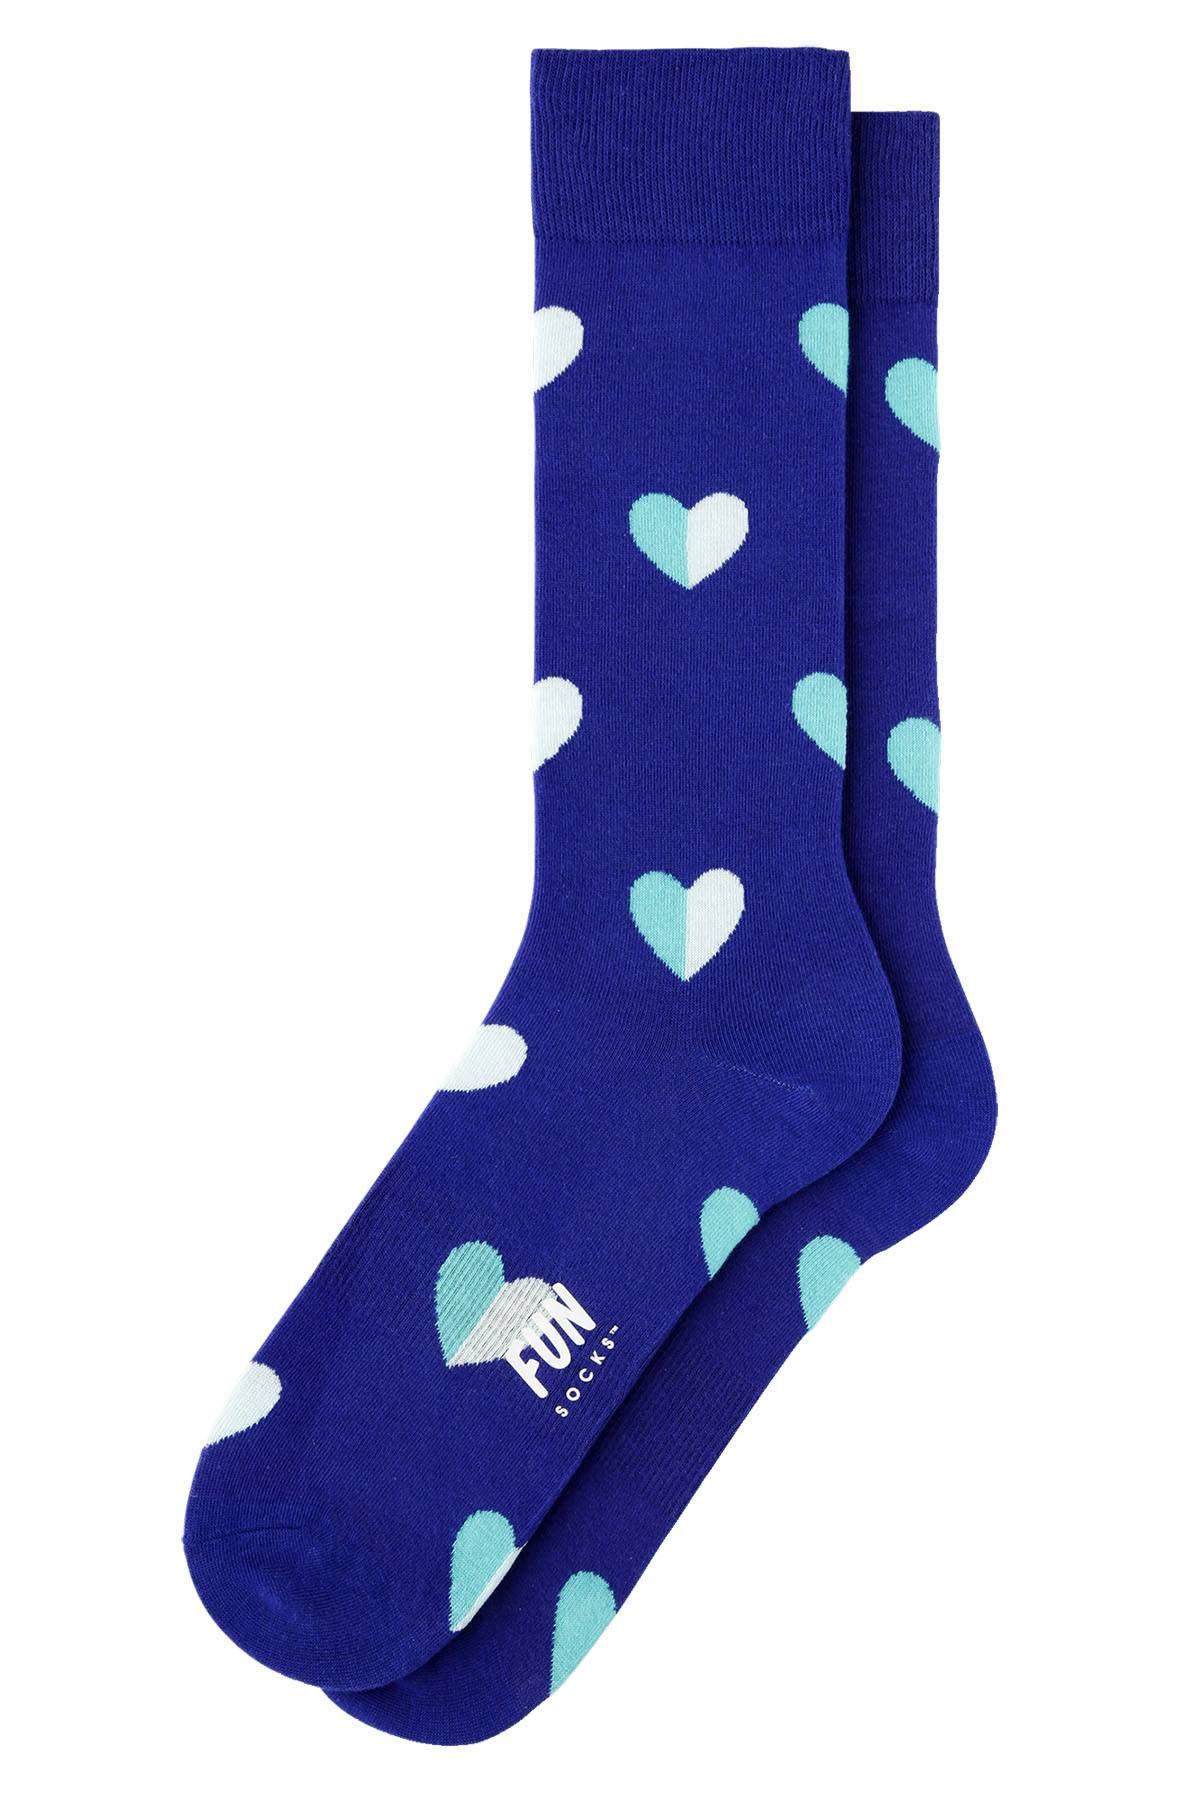 Fun Socks Blue/Turquoise Hearts Crew Socks – CheapUndies